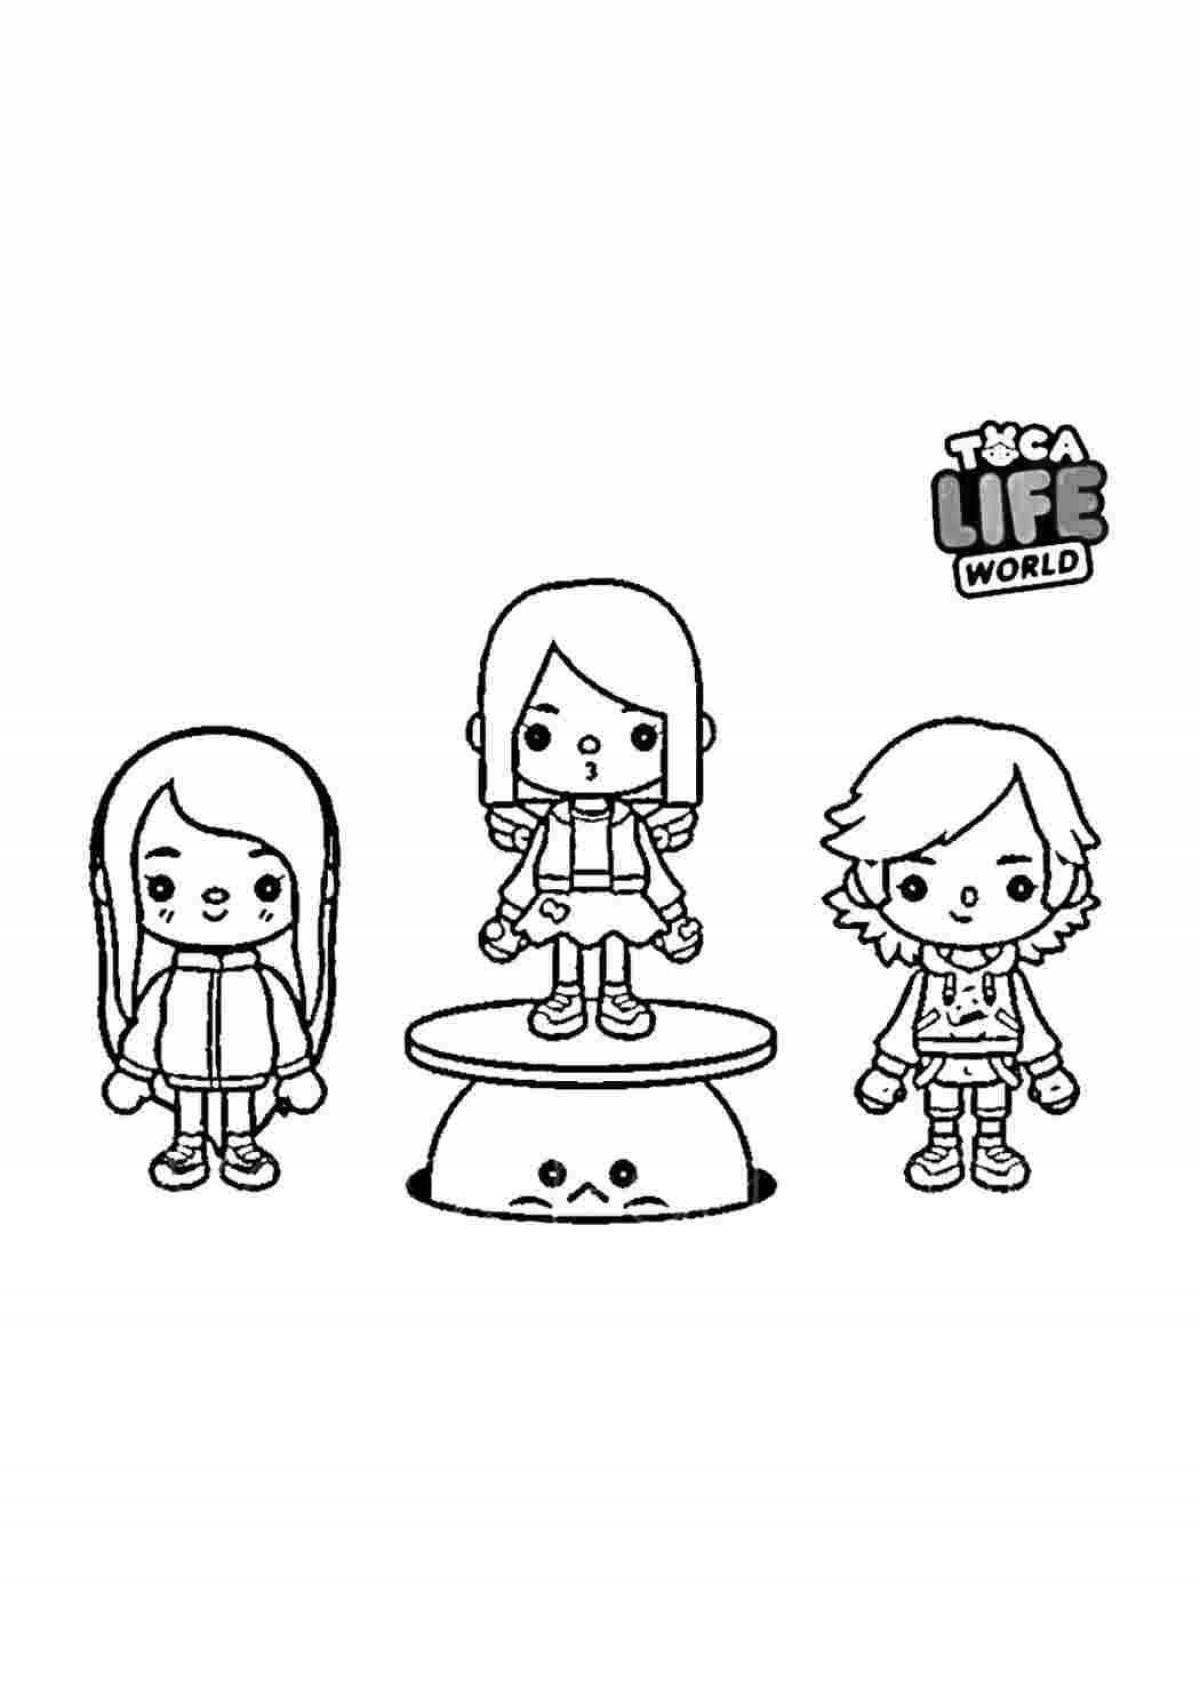 Humorous coloring black and white small toka boca characters